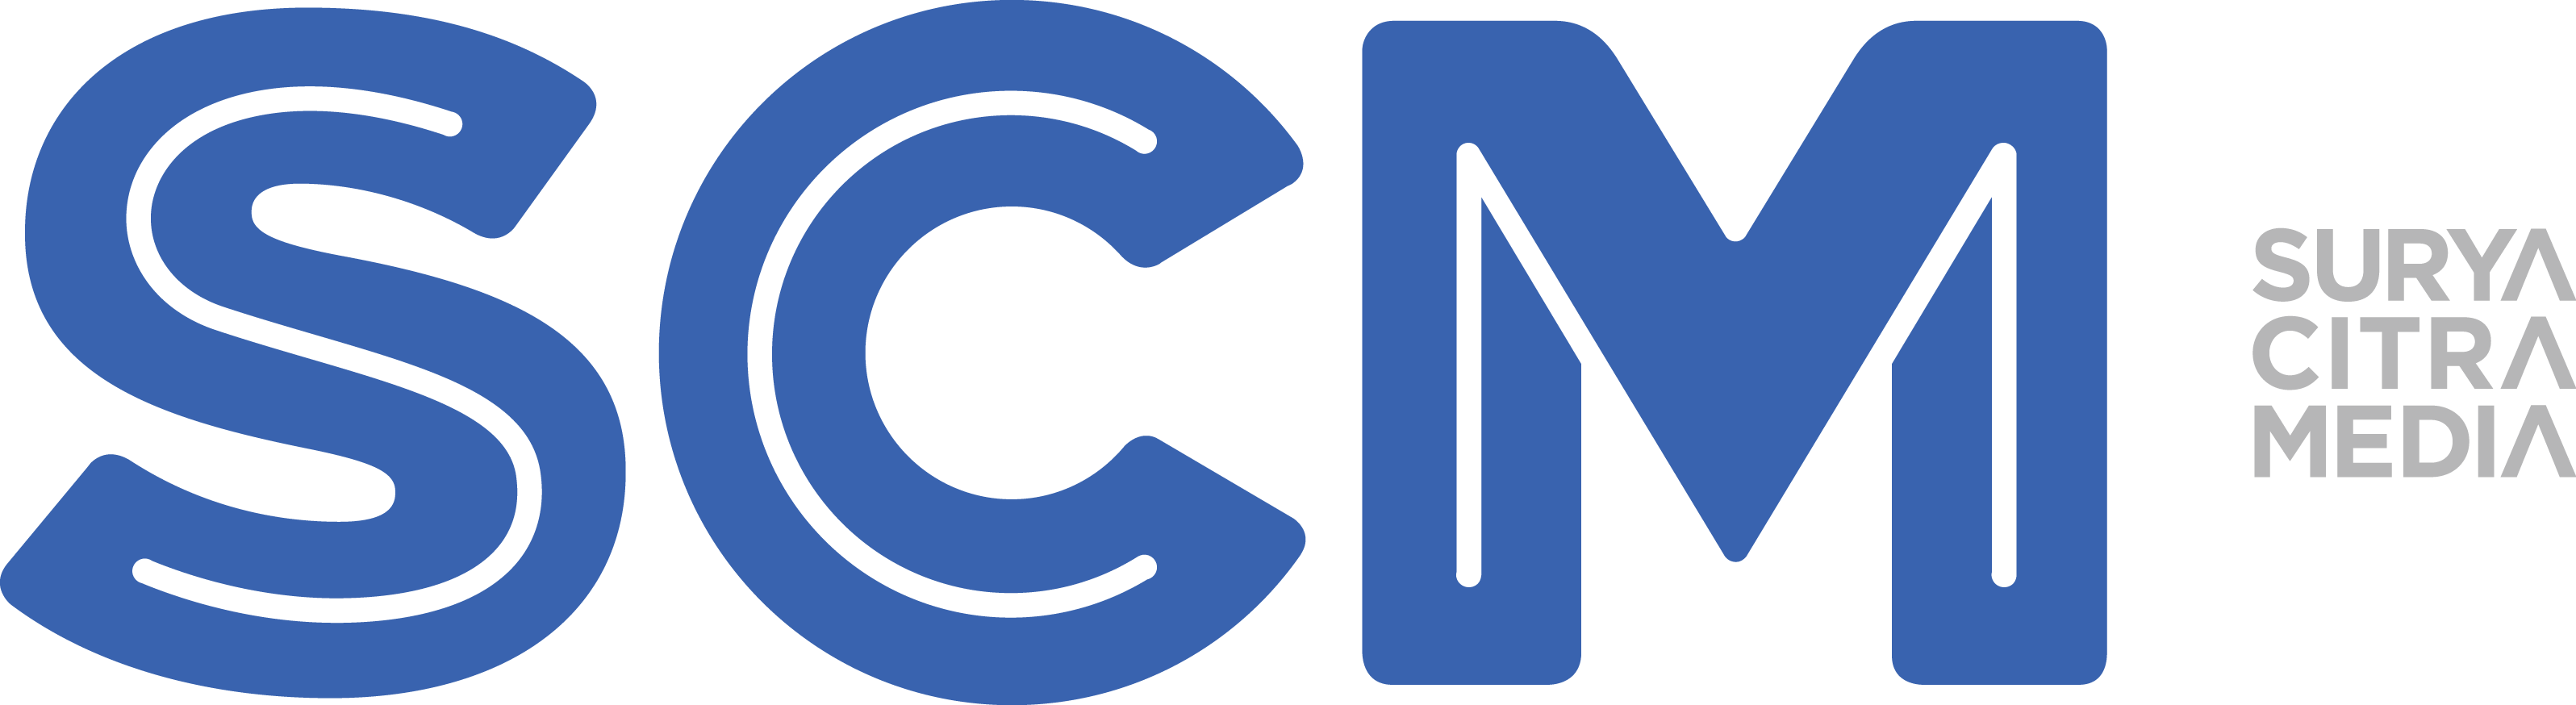 Surya Citra Media Brand Logo